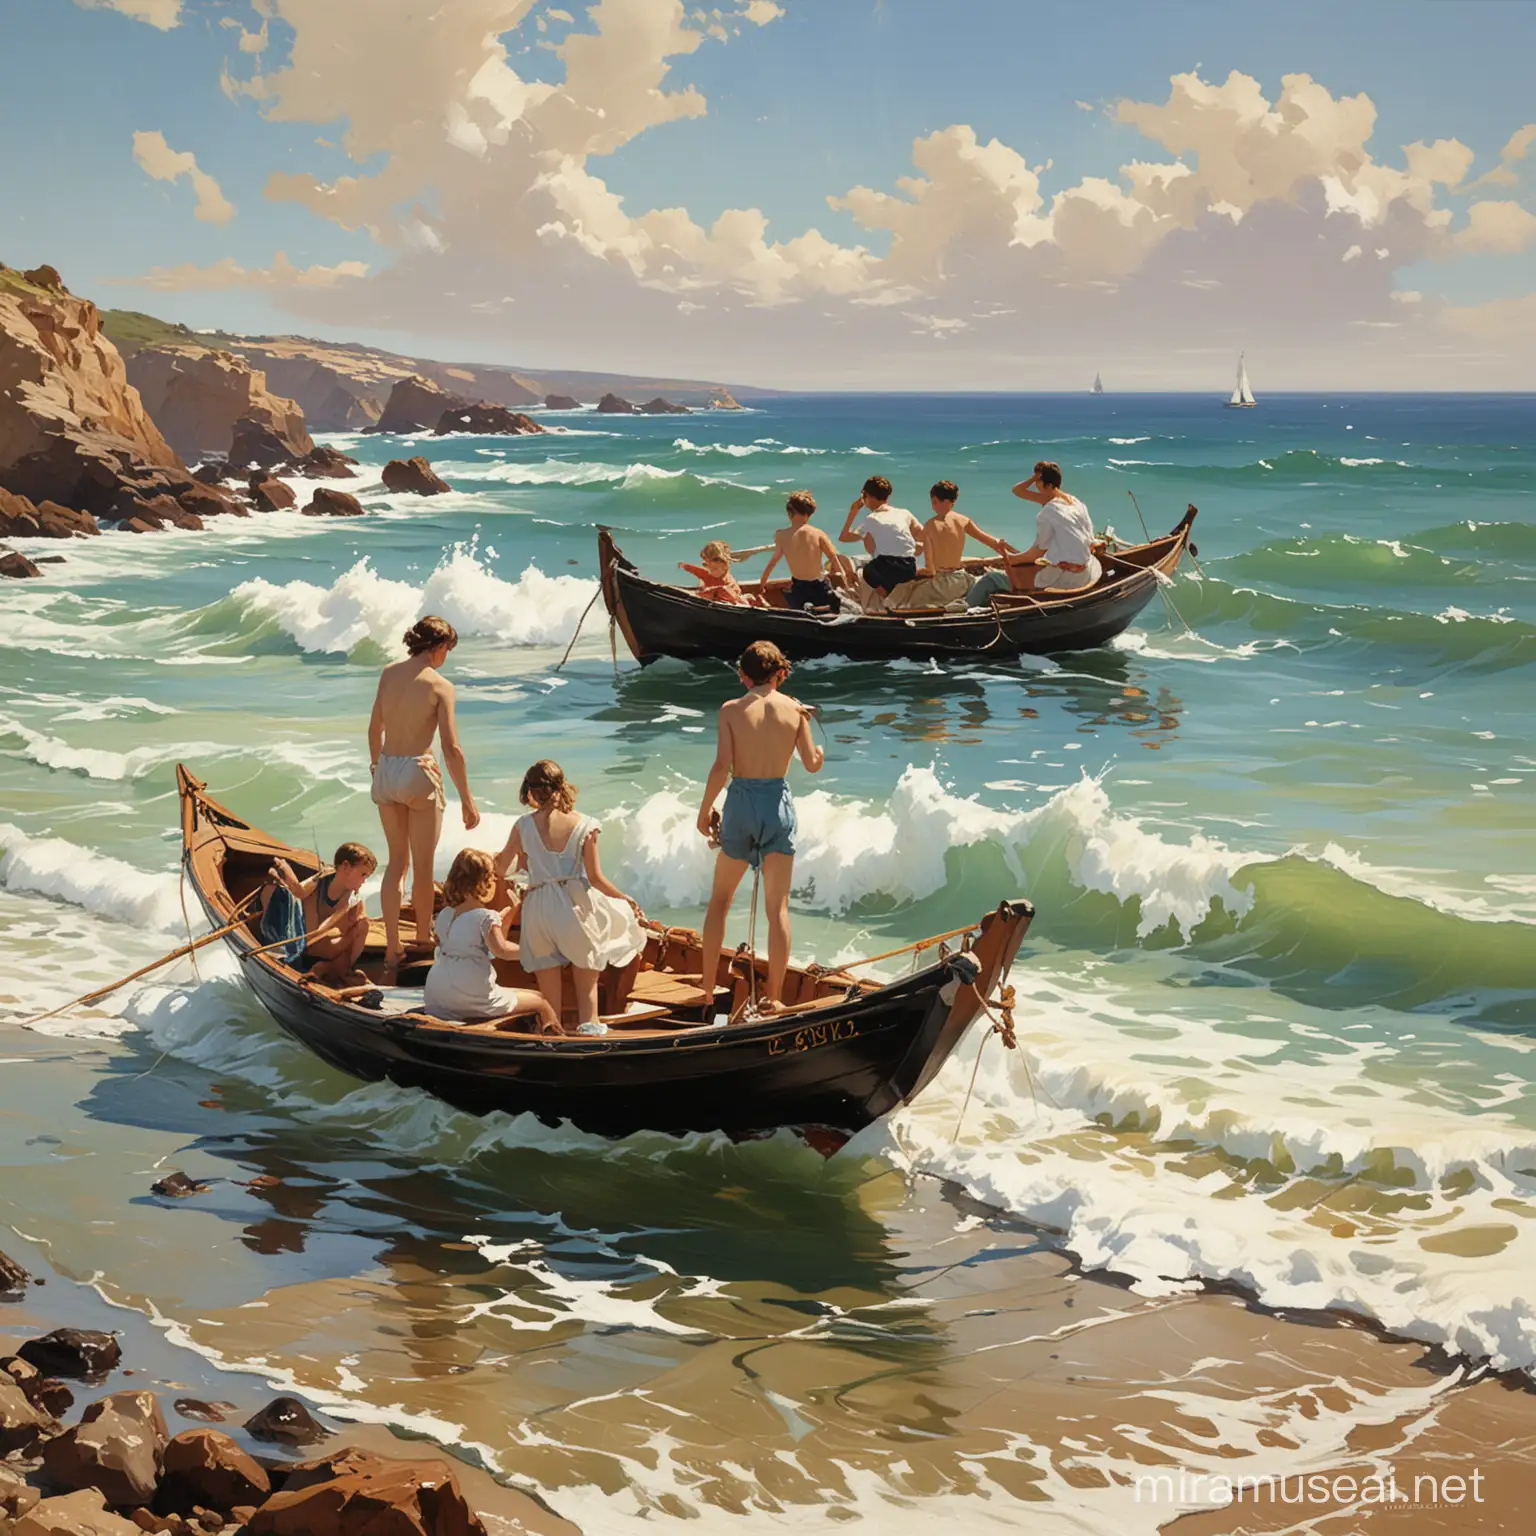 Seaside Adventure Joyful Children and Boats in Sorolla Style